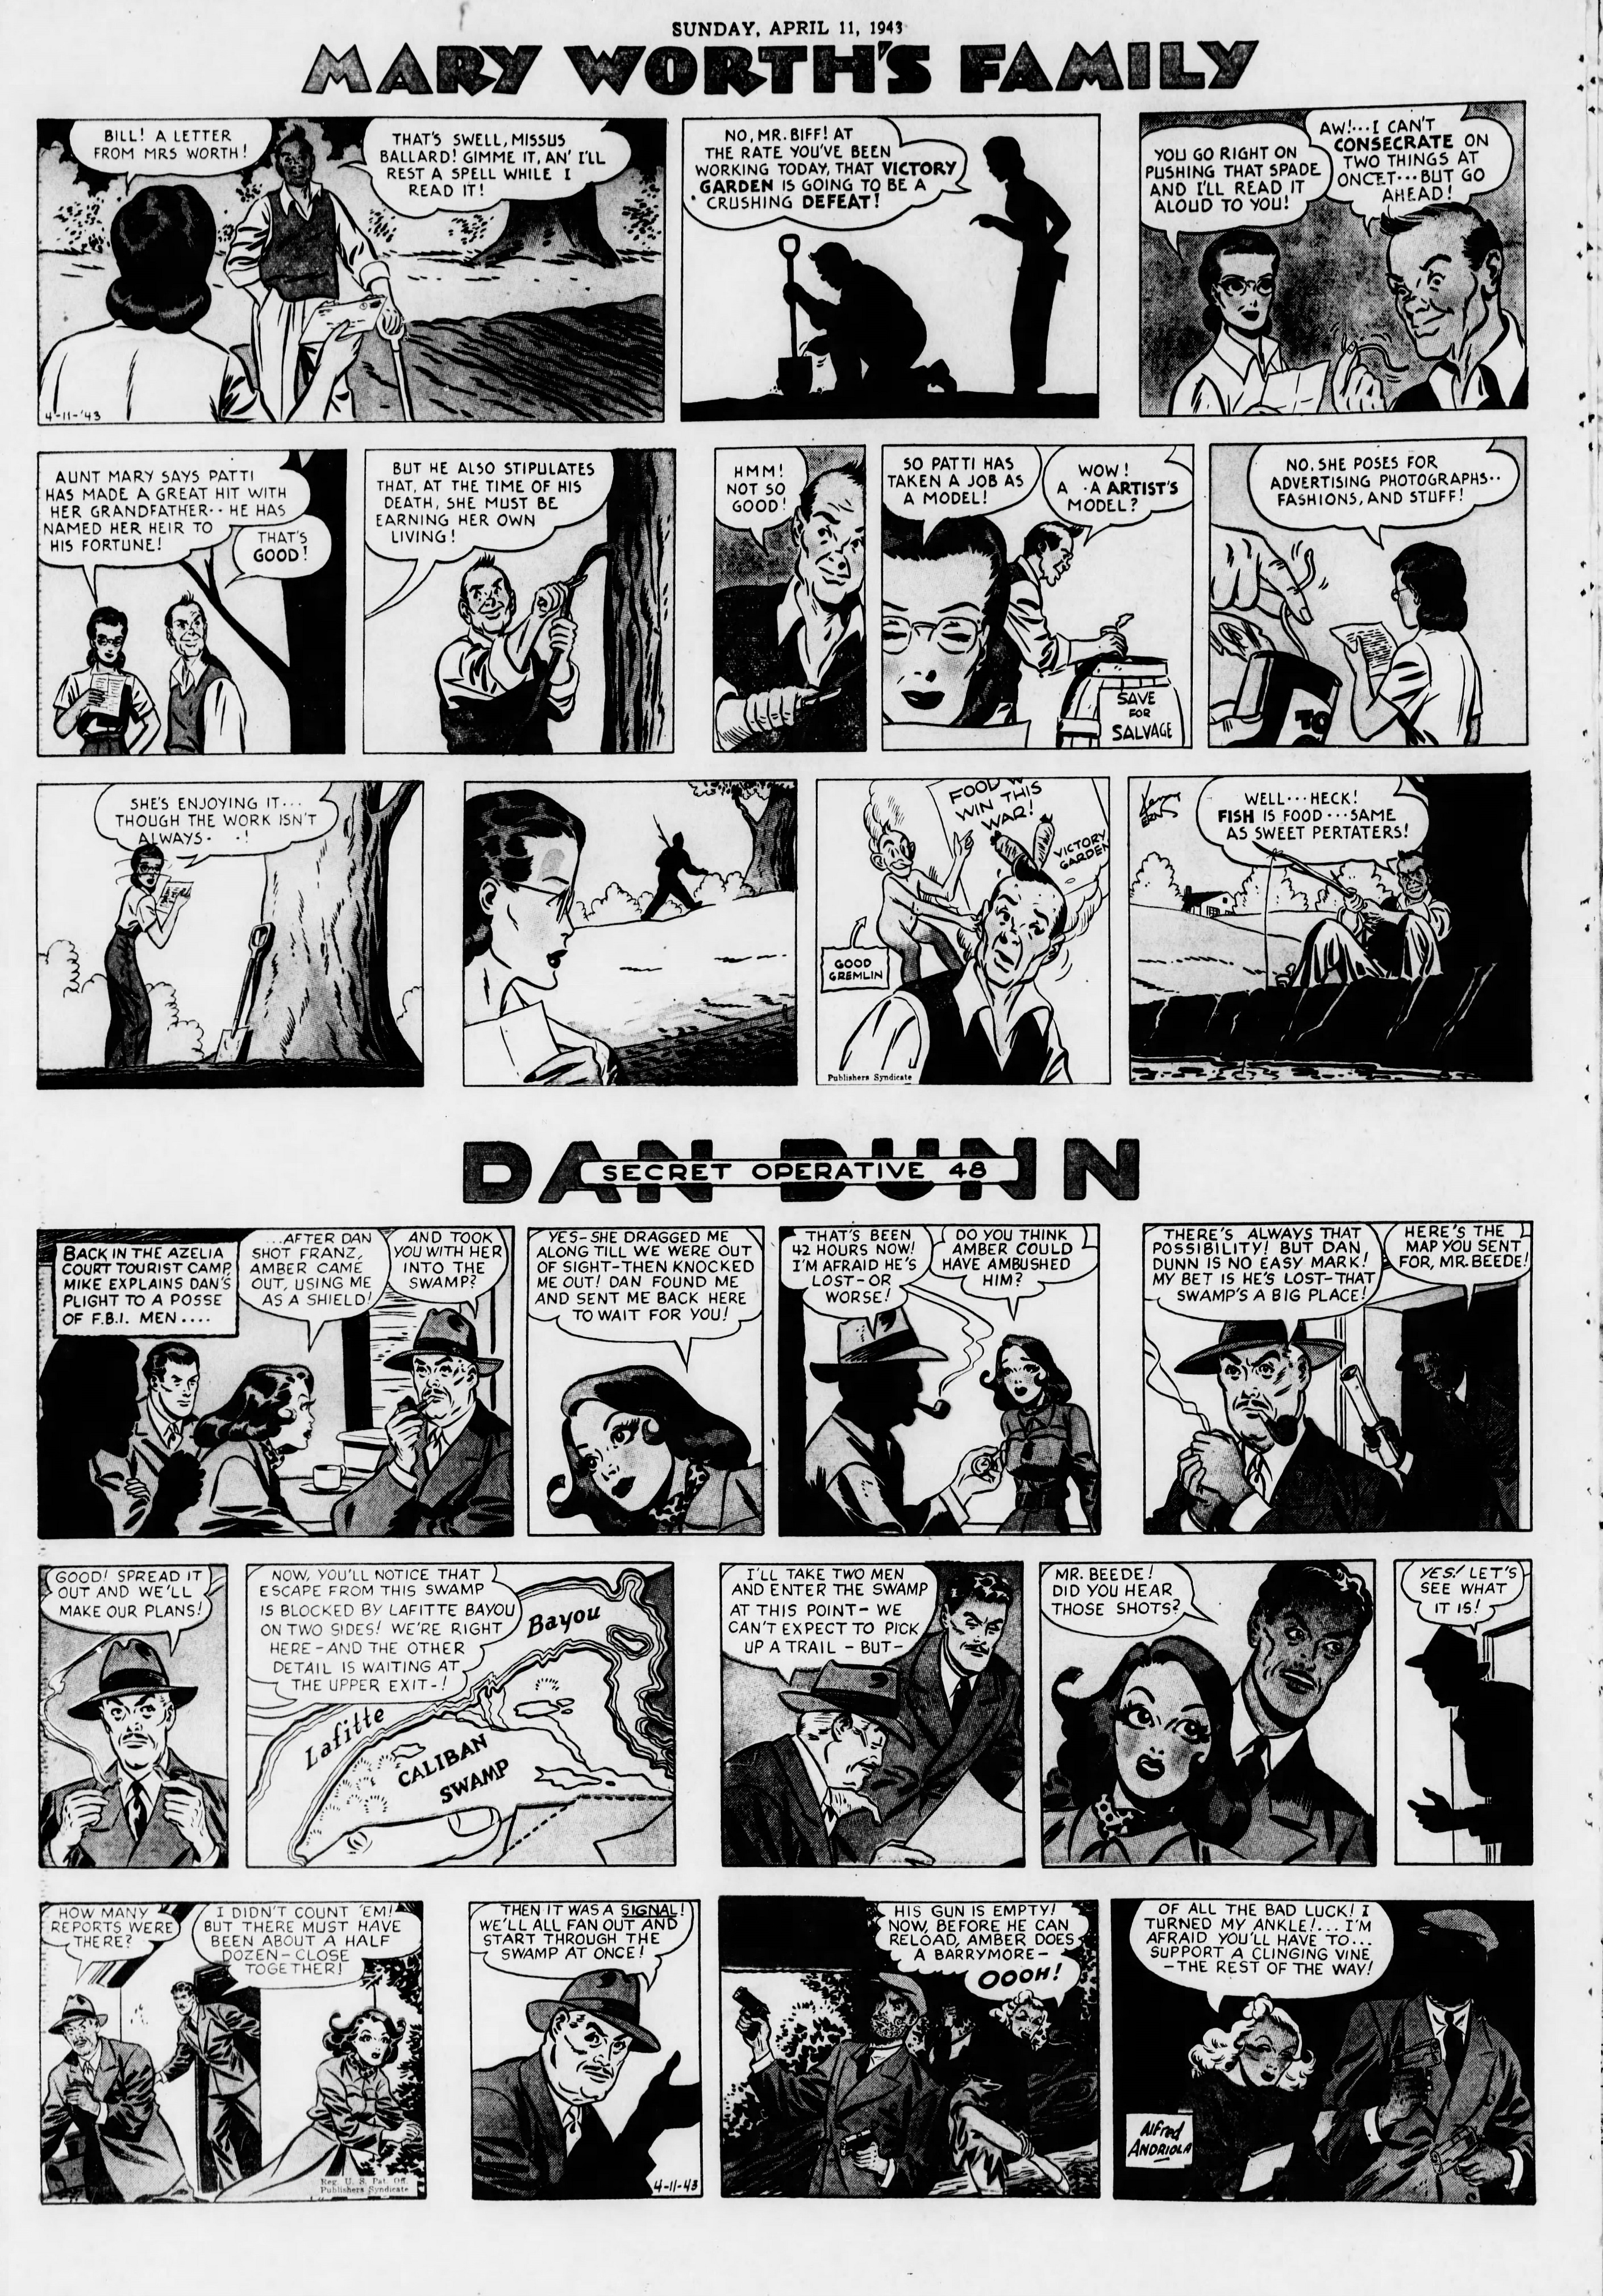 The_Brooklyn_Daily_Eagle_Sun__Apr_11__1943_(9).jpg